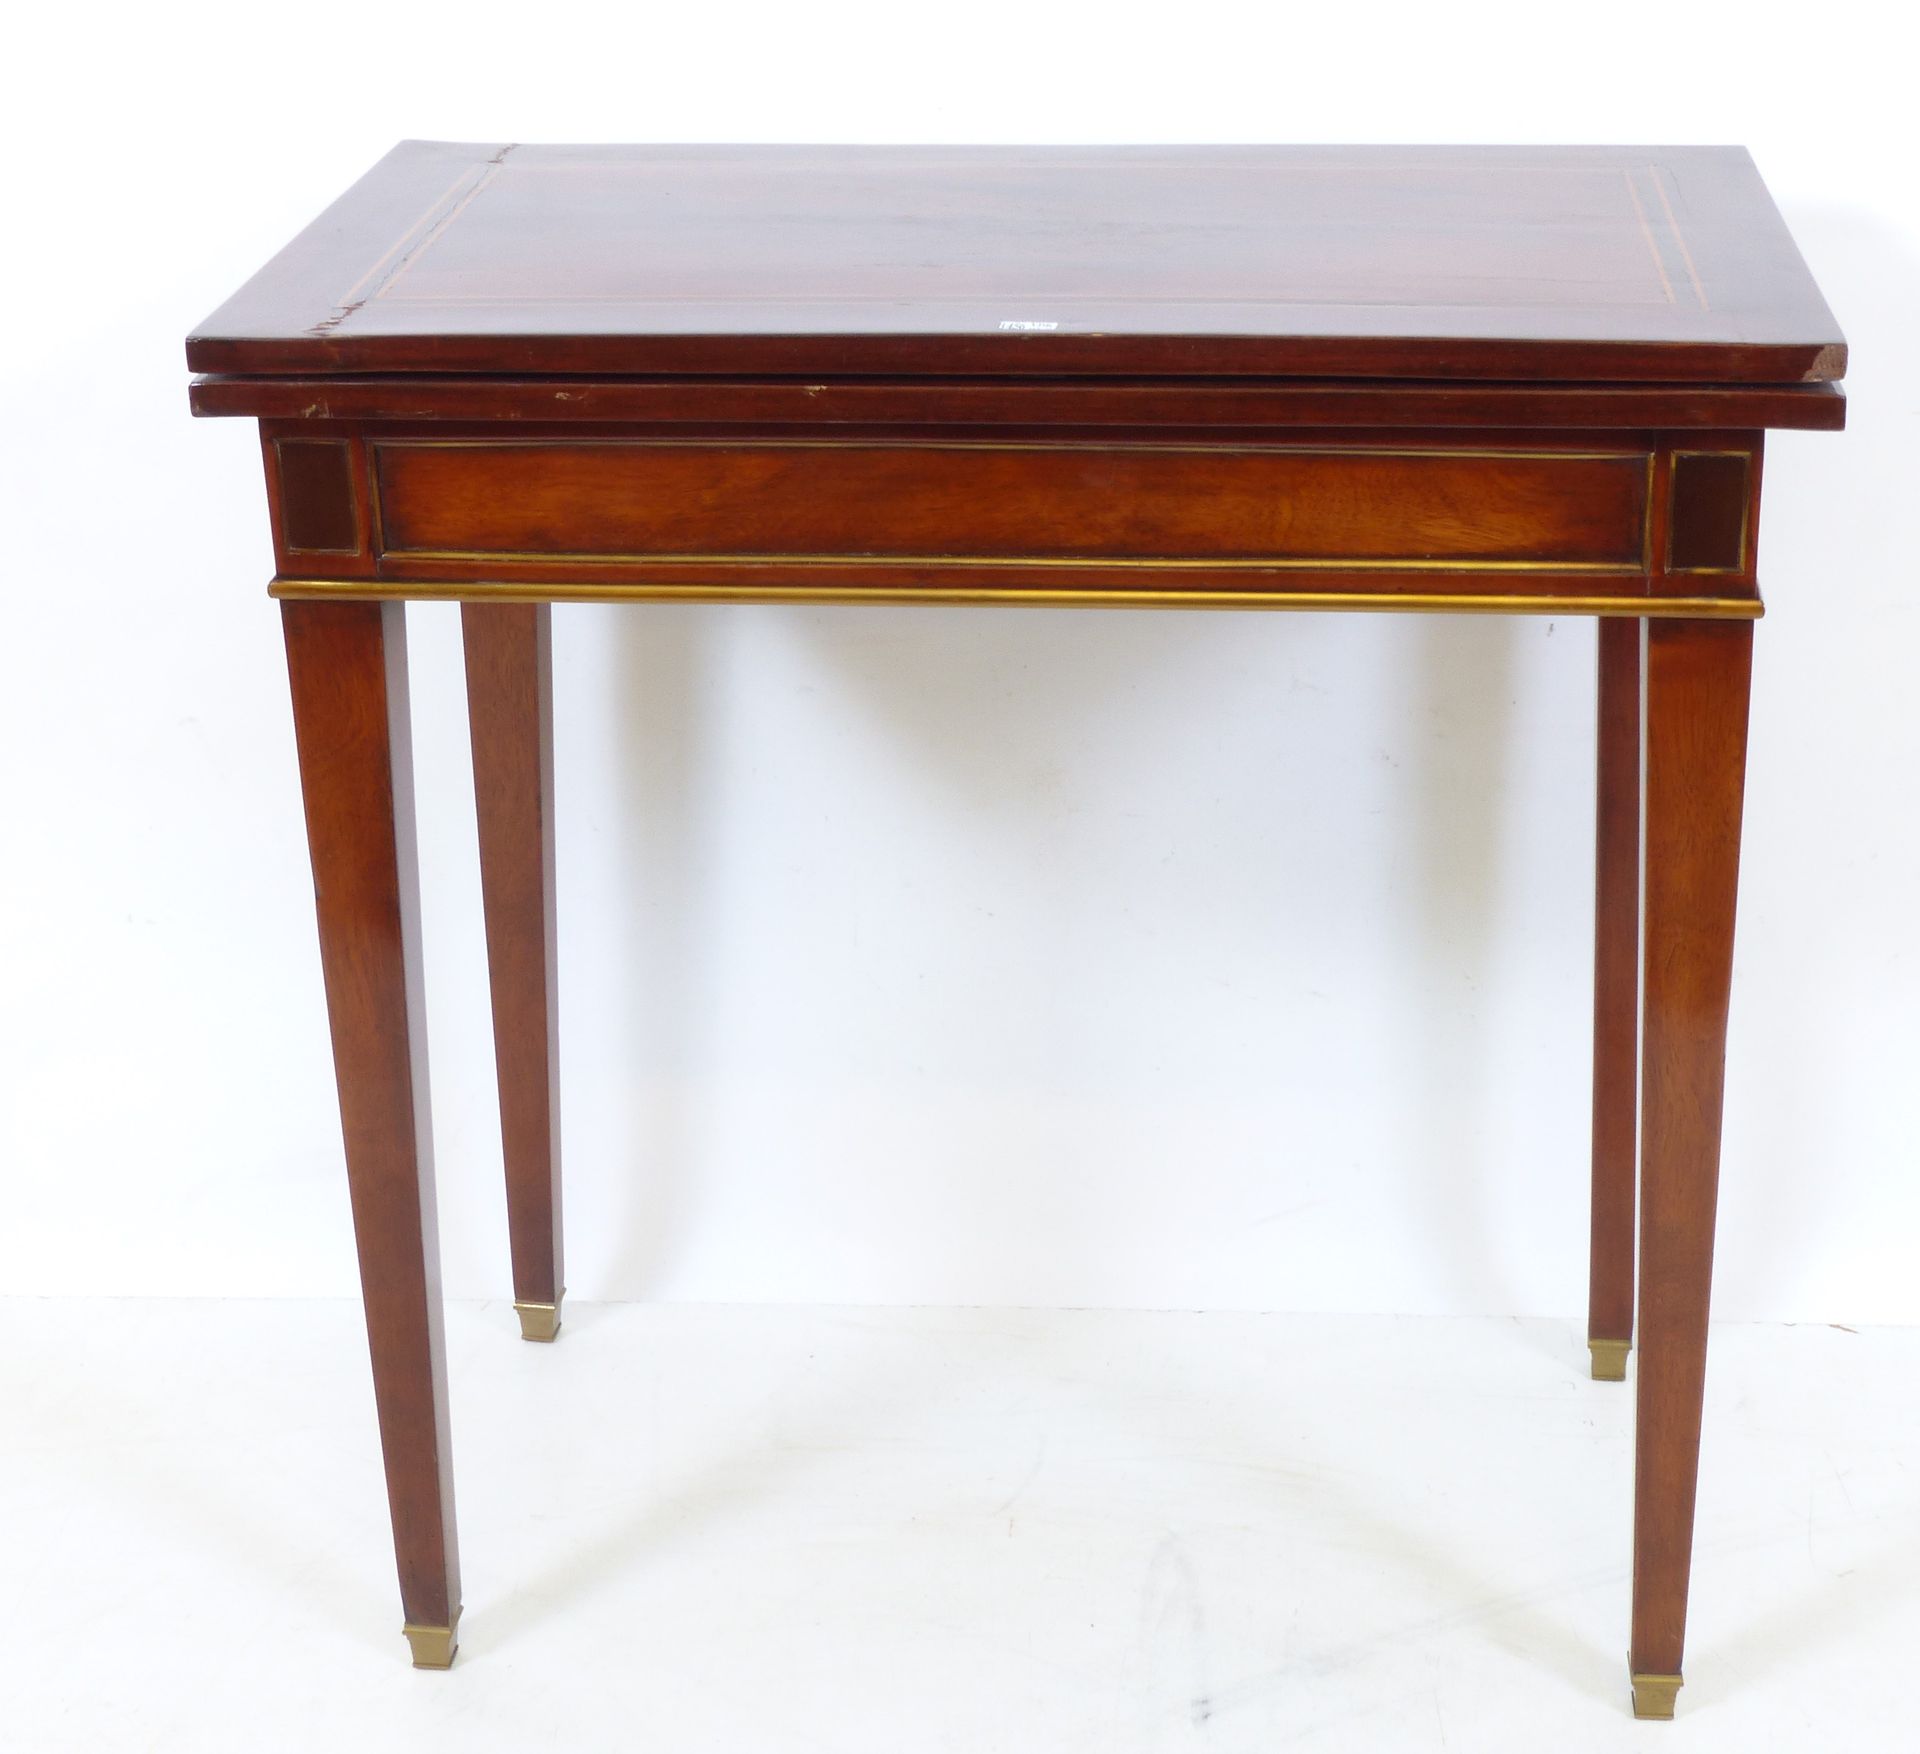 Null 路易十六时期的桃花心木小游戏桌。尺寸：73x42x73厘米。